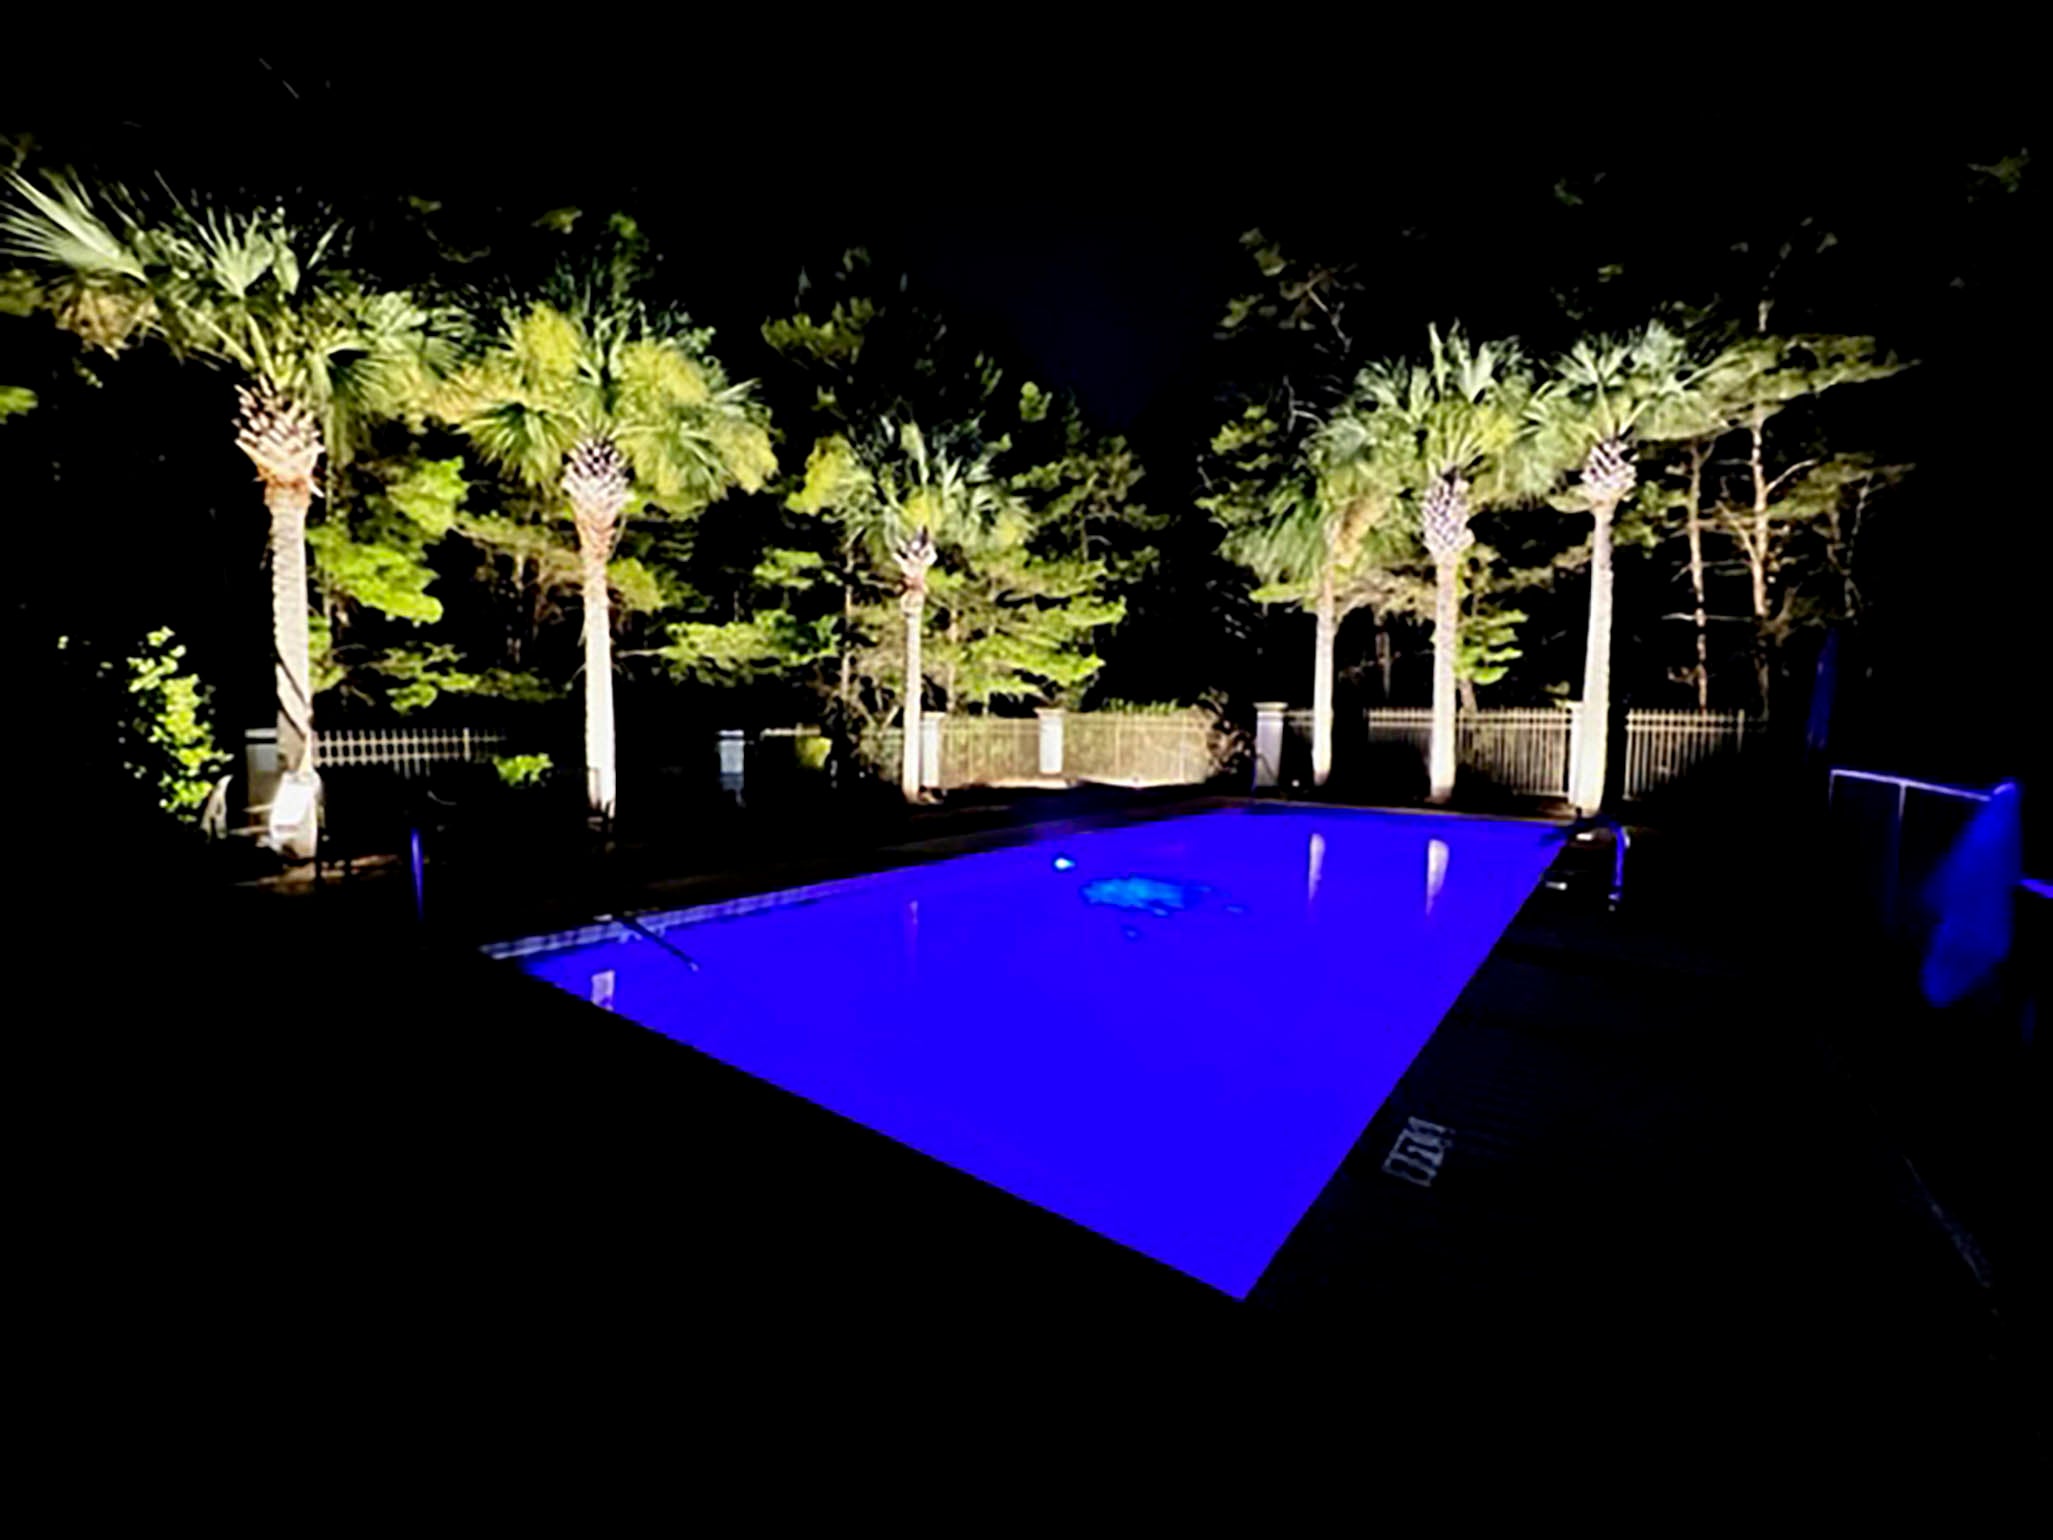 Community pool at night!